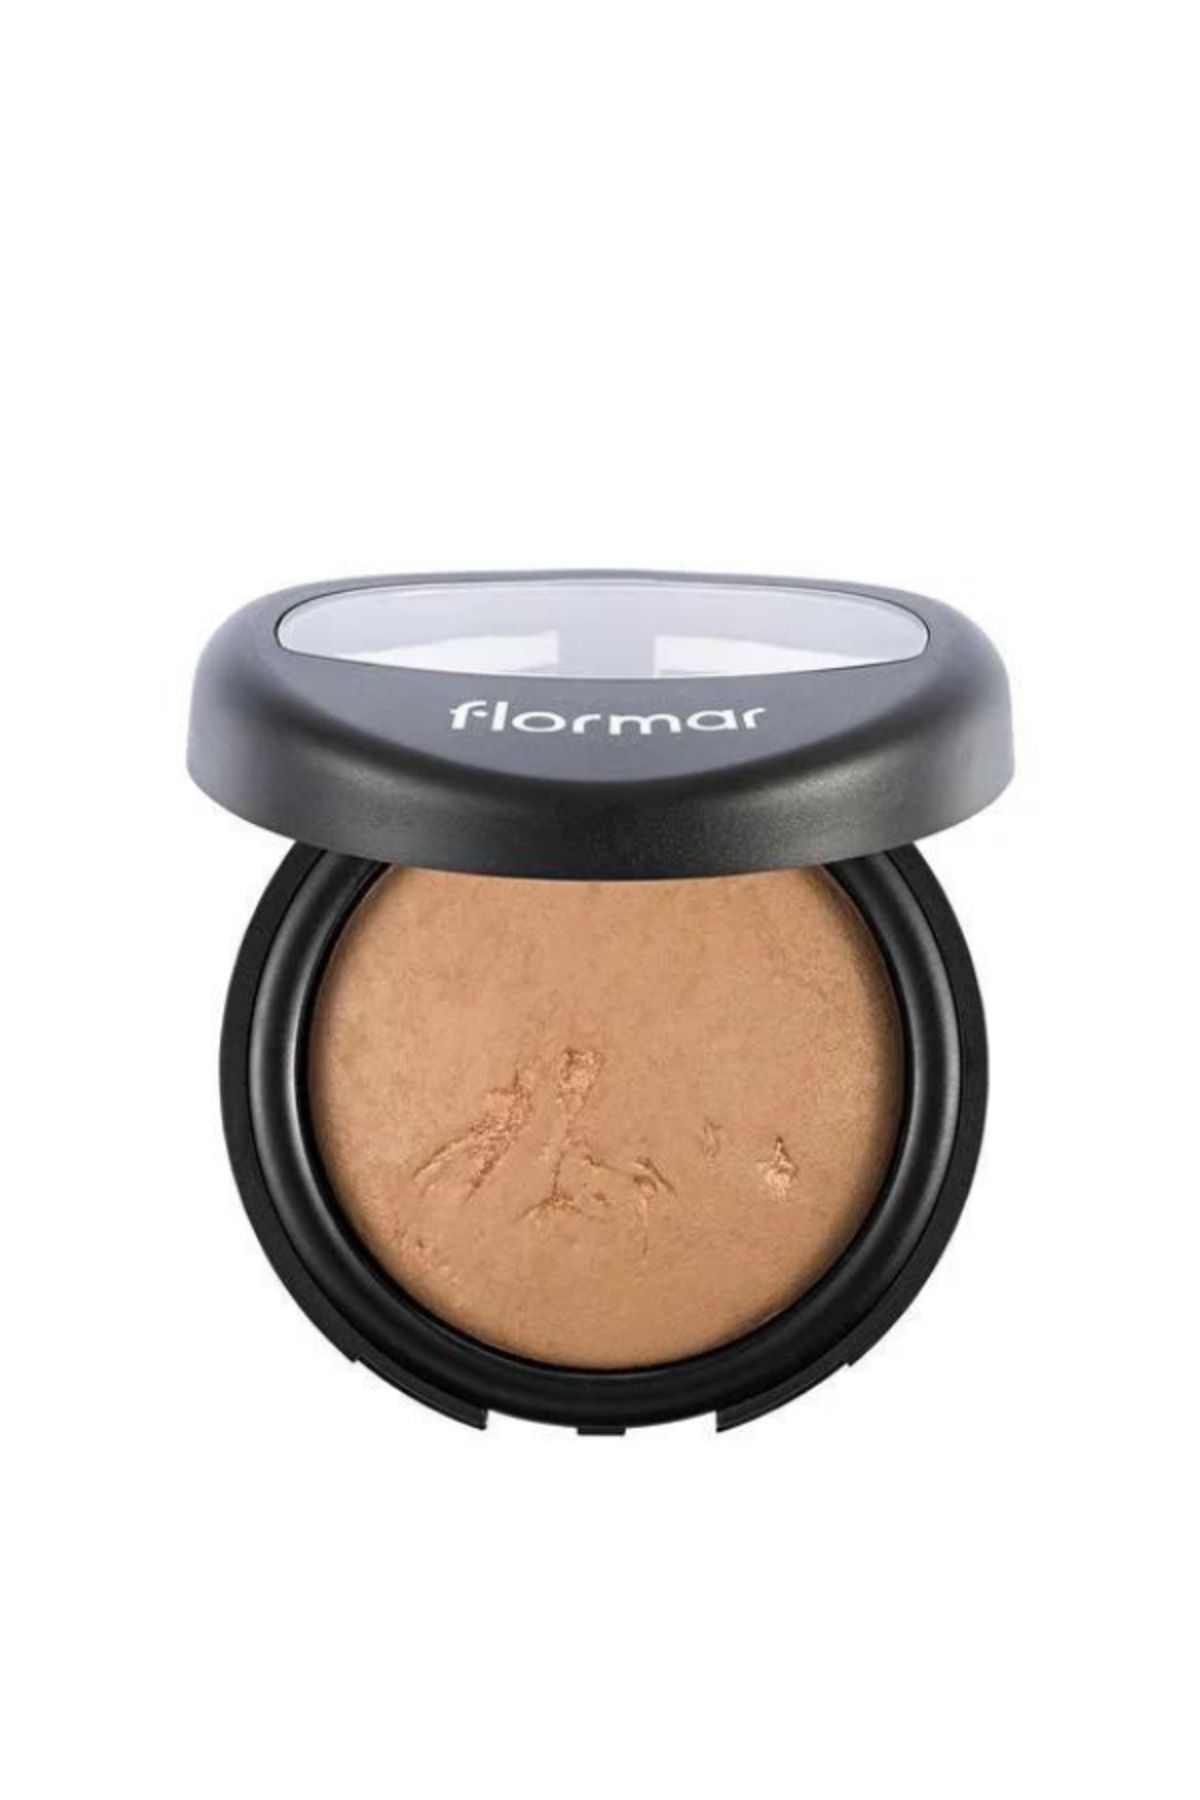 Flormar مجموعه آرایشی 6 قطعه / کانسیلر / پالت سایه چشم / ژل ایلاینر / رژ لب مایع